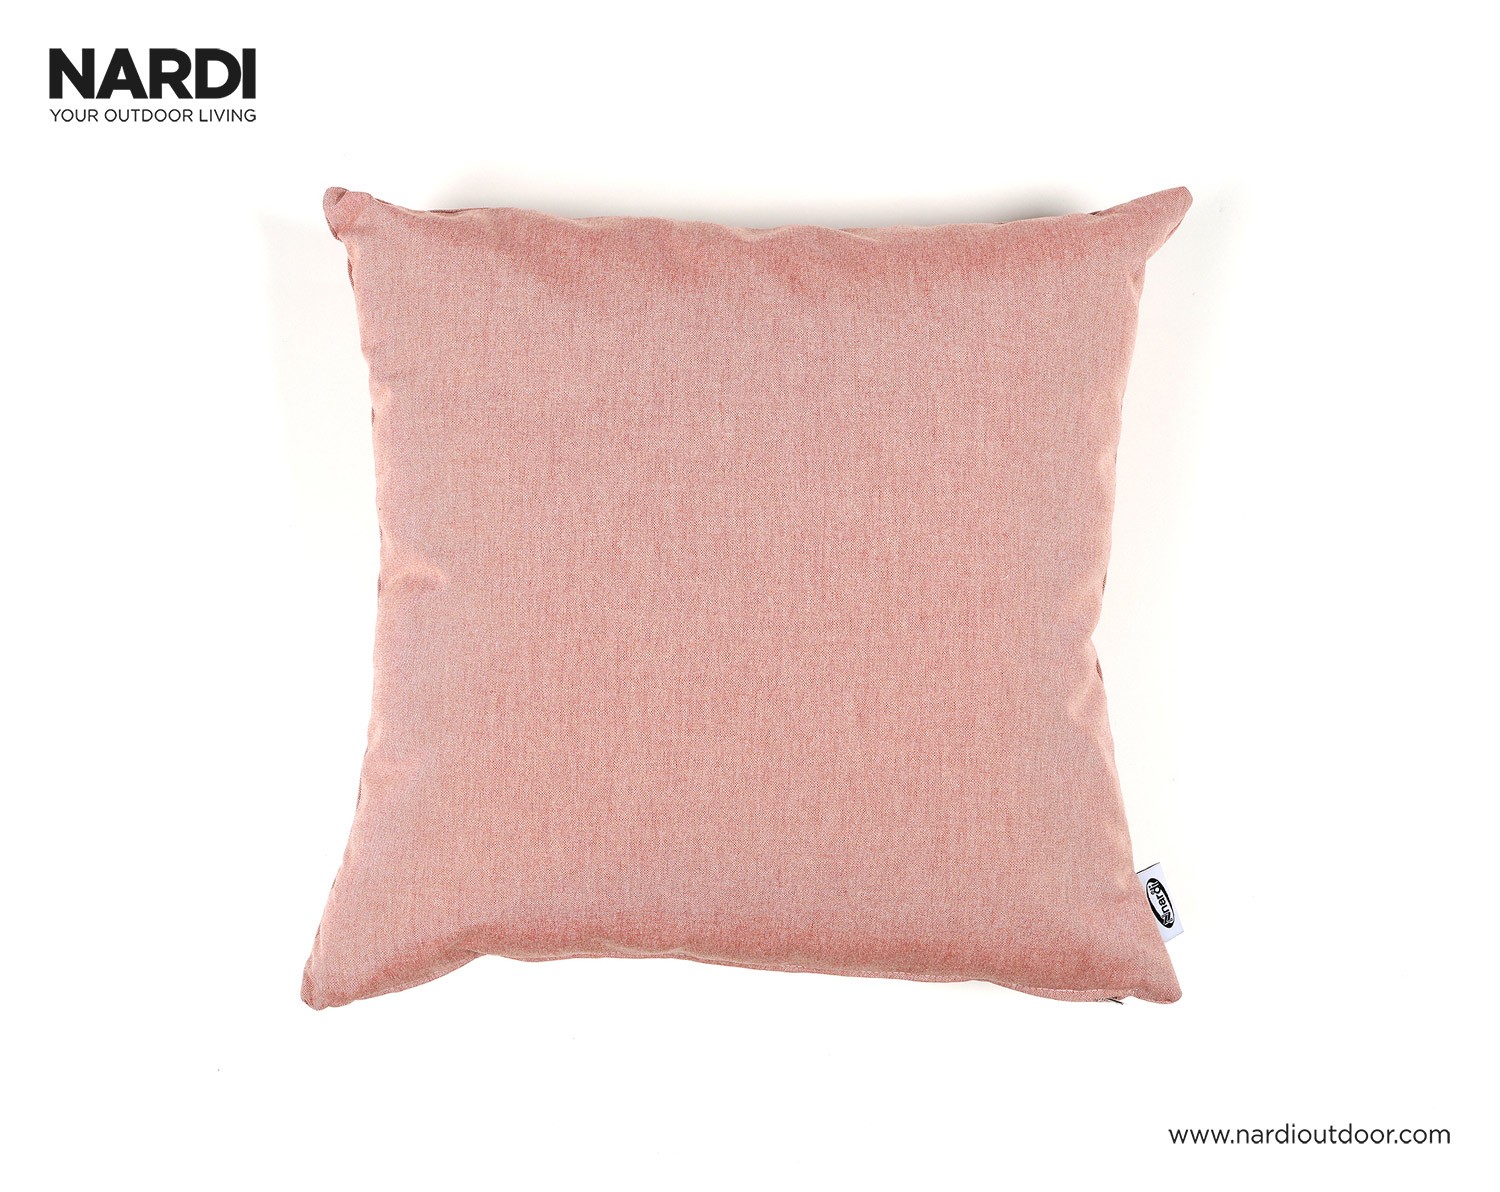 Nardi Dekokissen / Zierkissen Cuscino Passpartout 50x48cm rosa quarzo